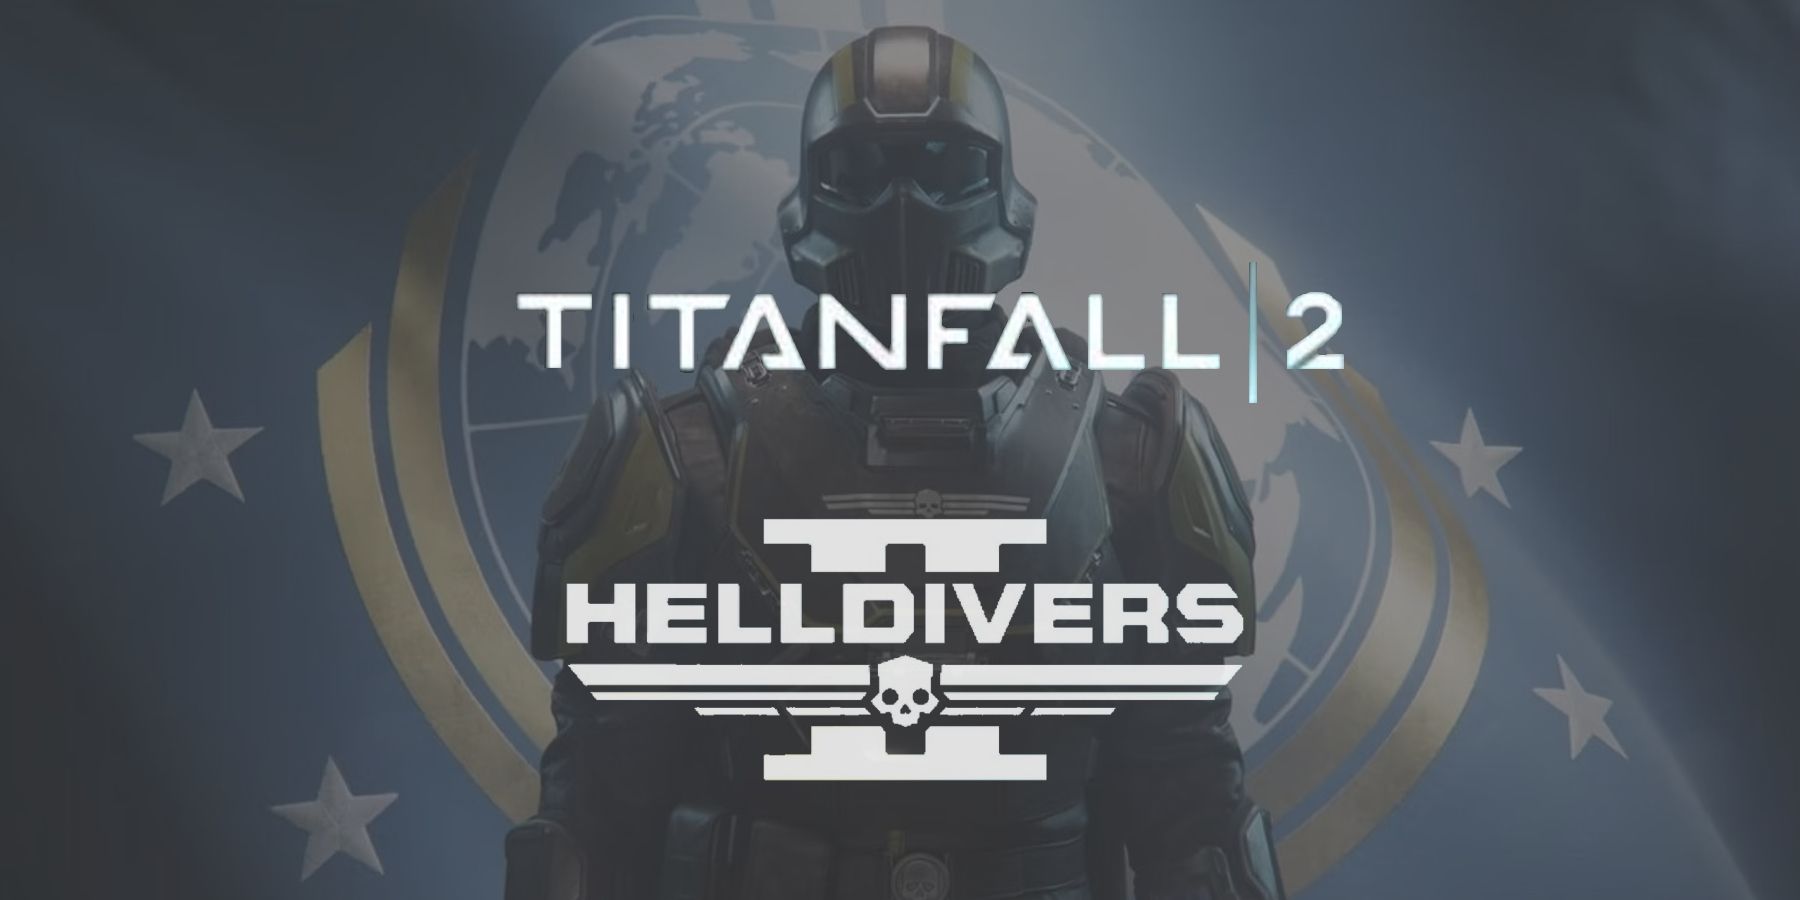 Titanfall 2 Helldivers 2 logo edit